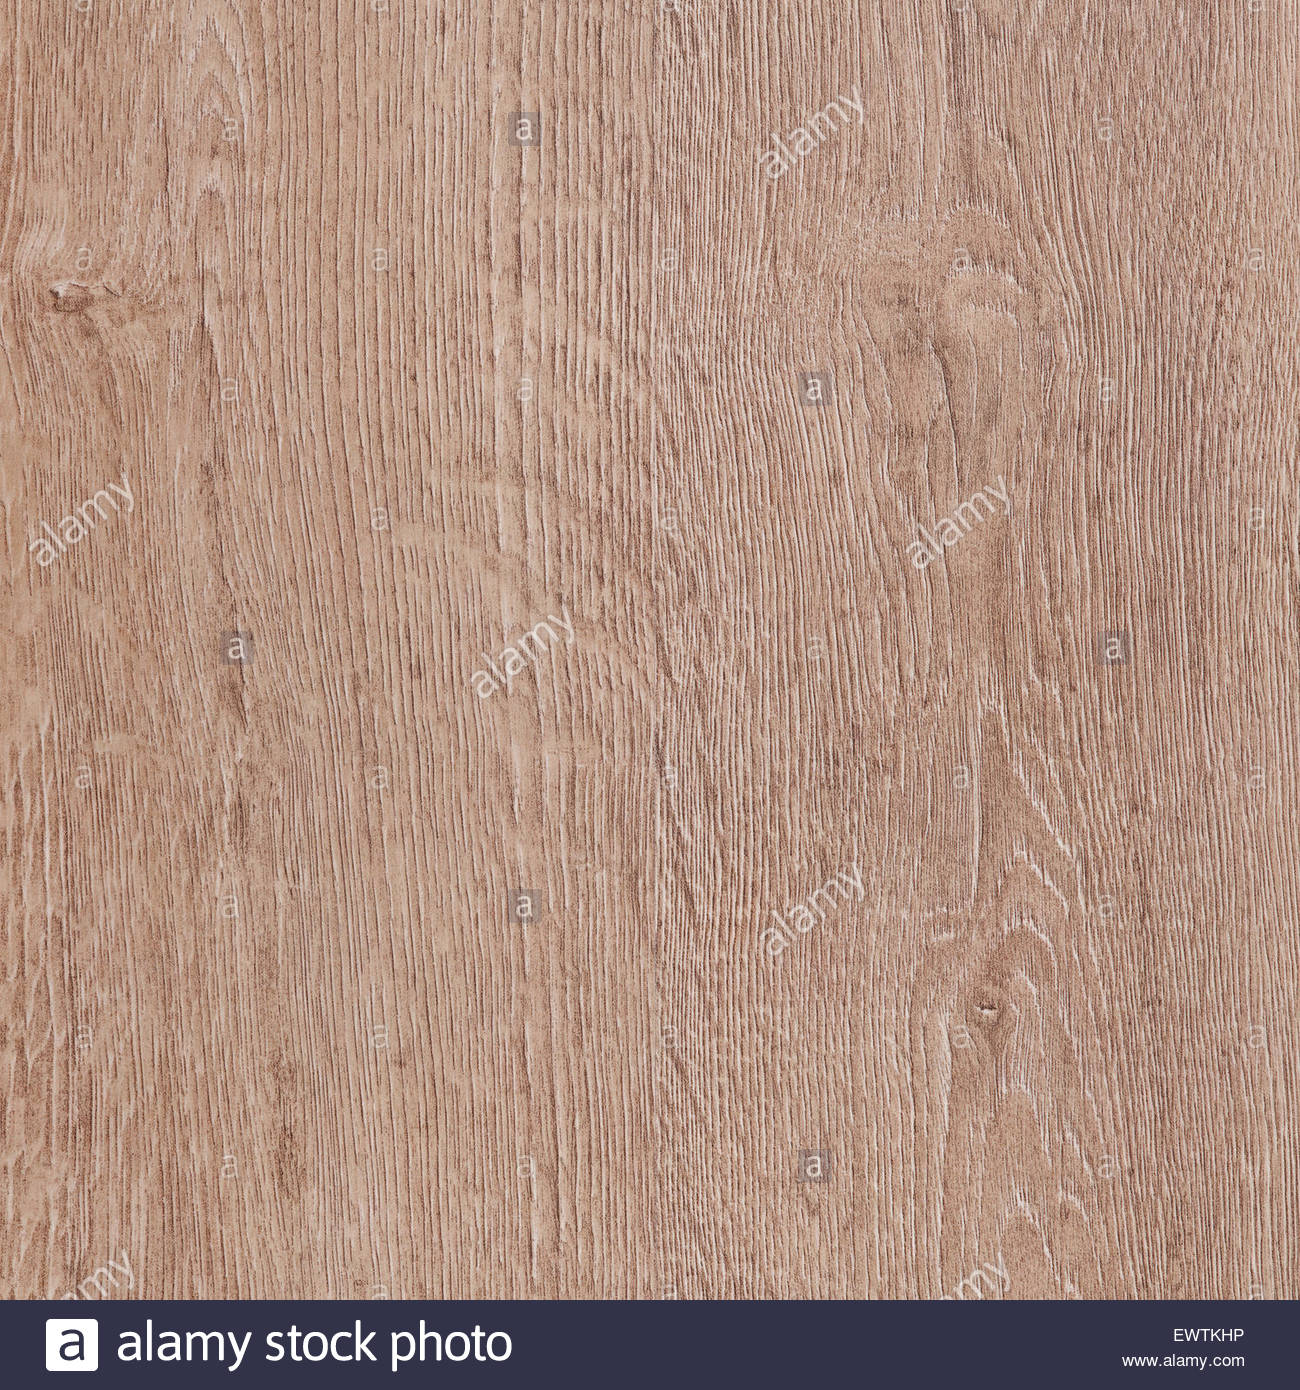 Wood Background Or Oak Furniture Texture Stock Photo